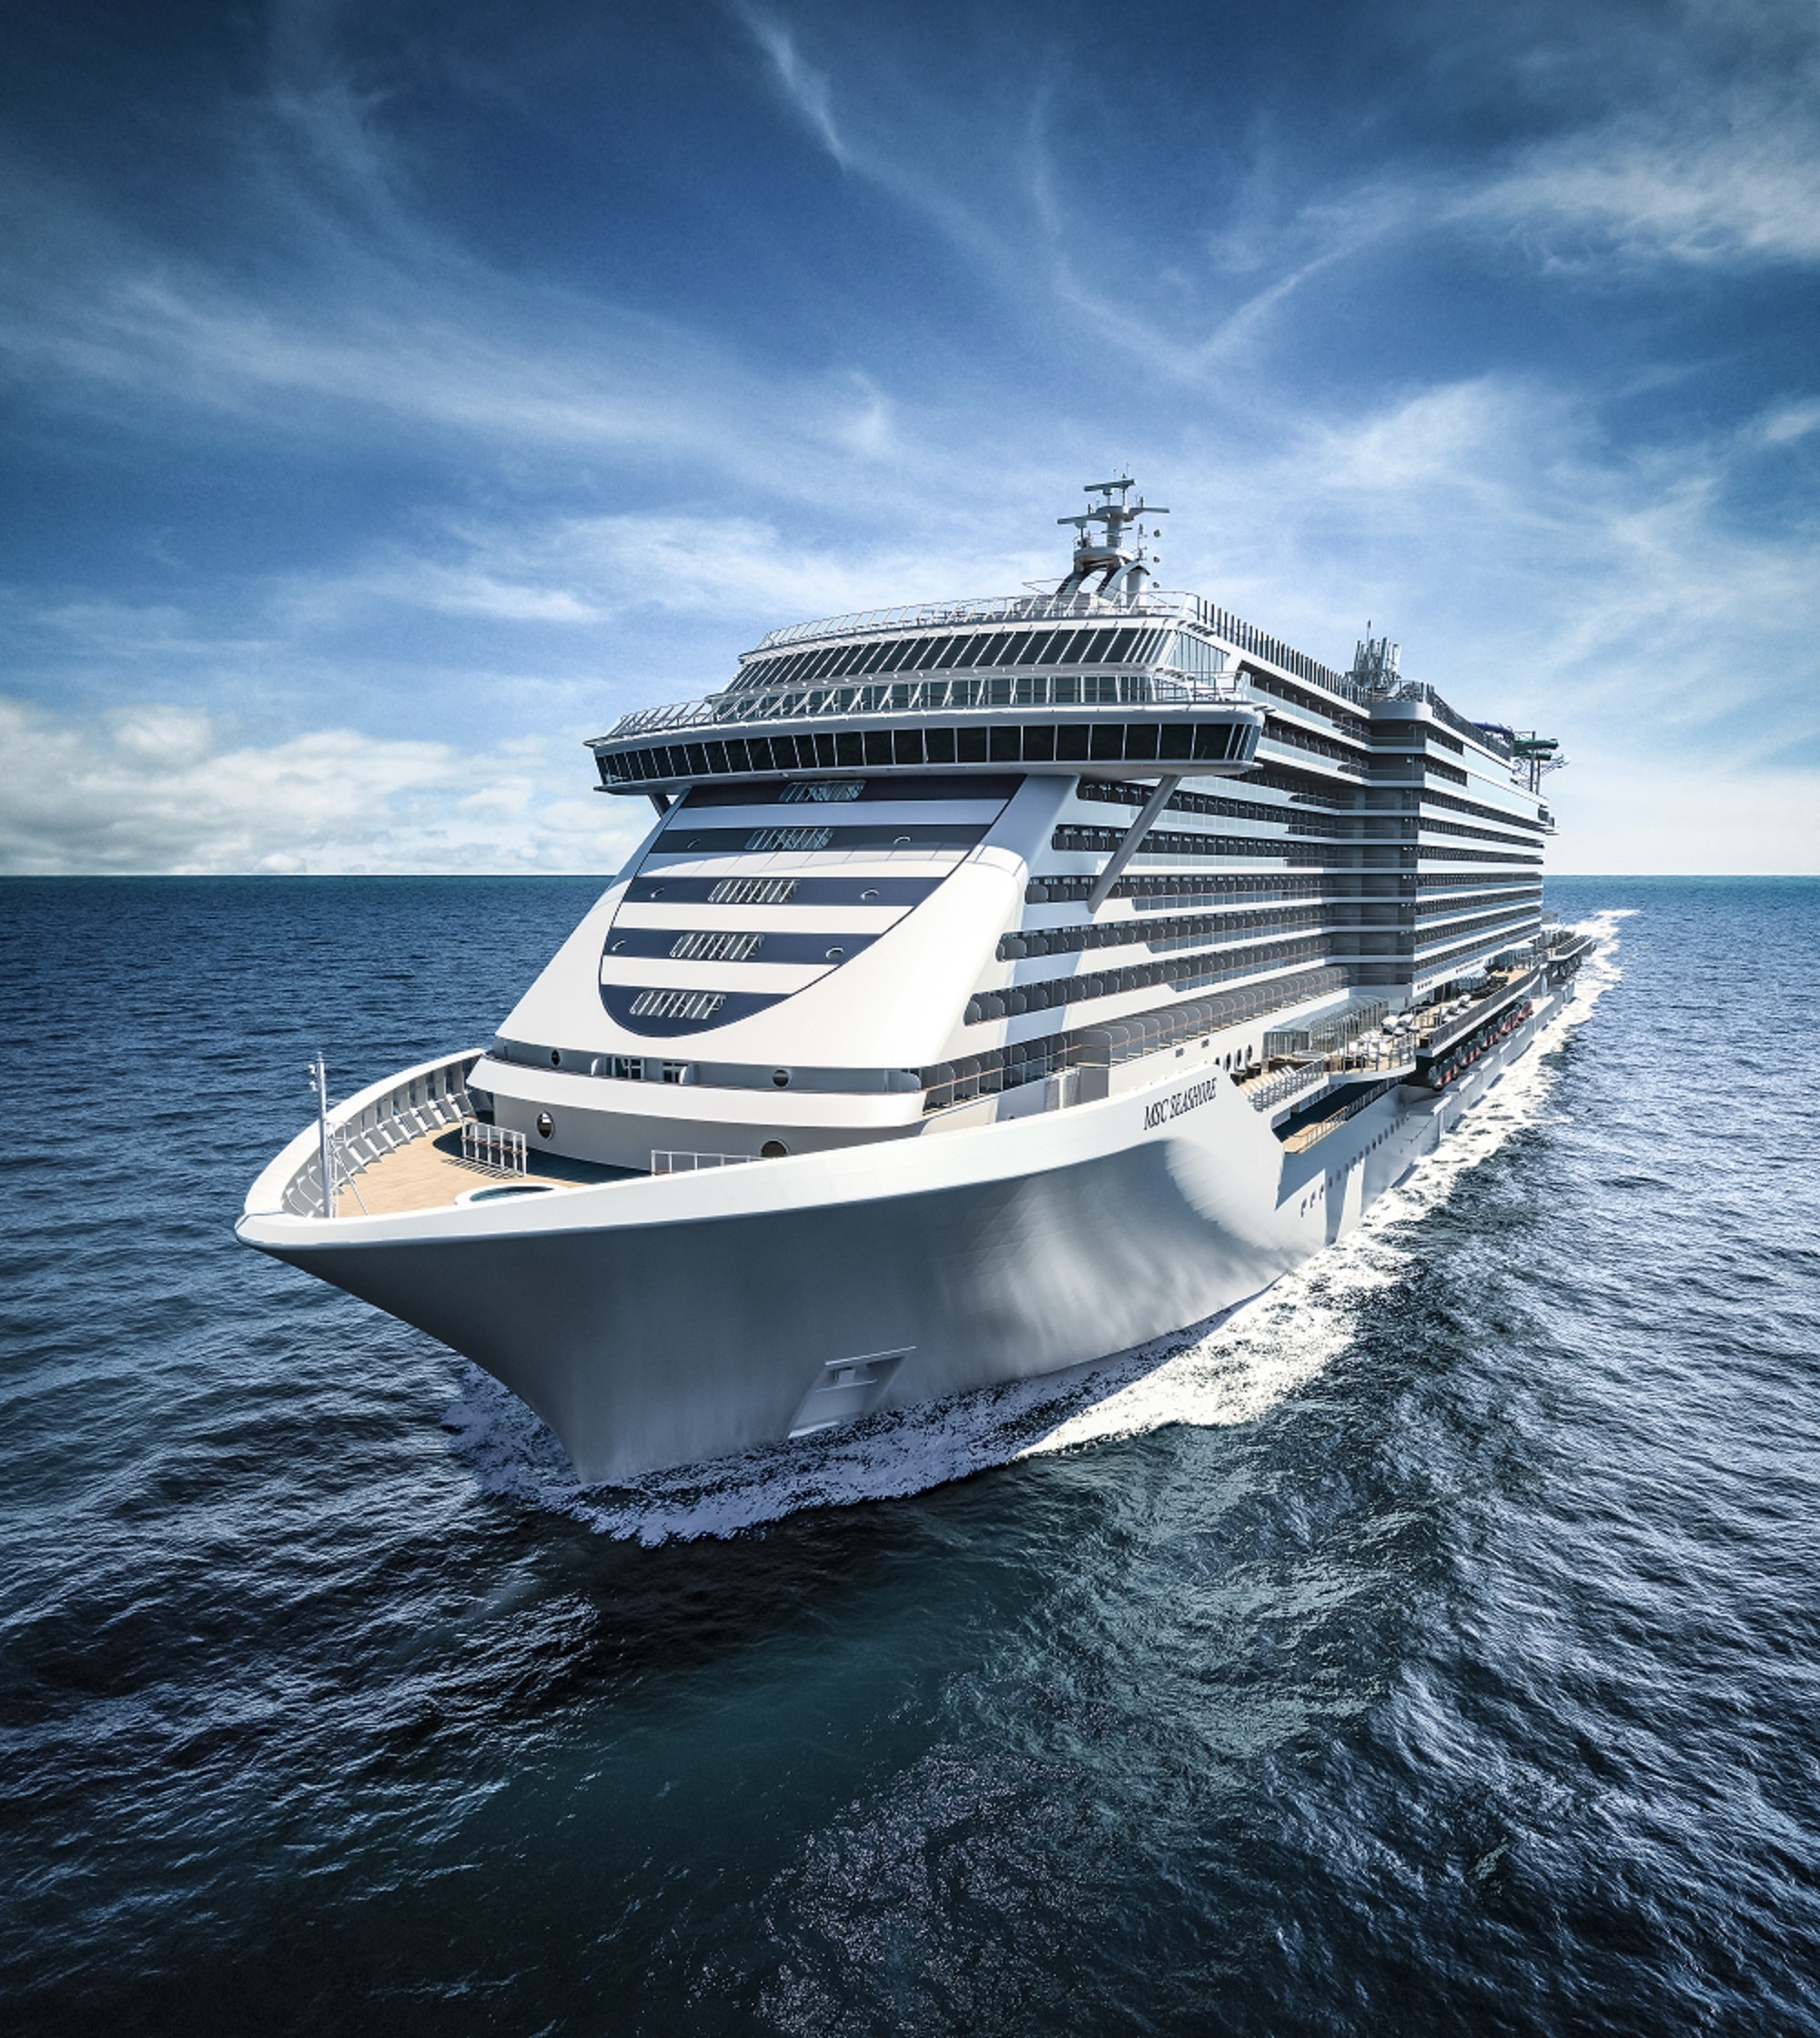 msc cruise ship website